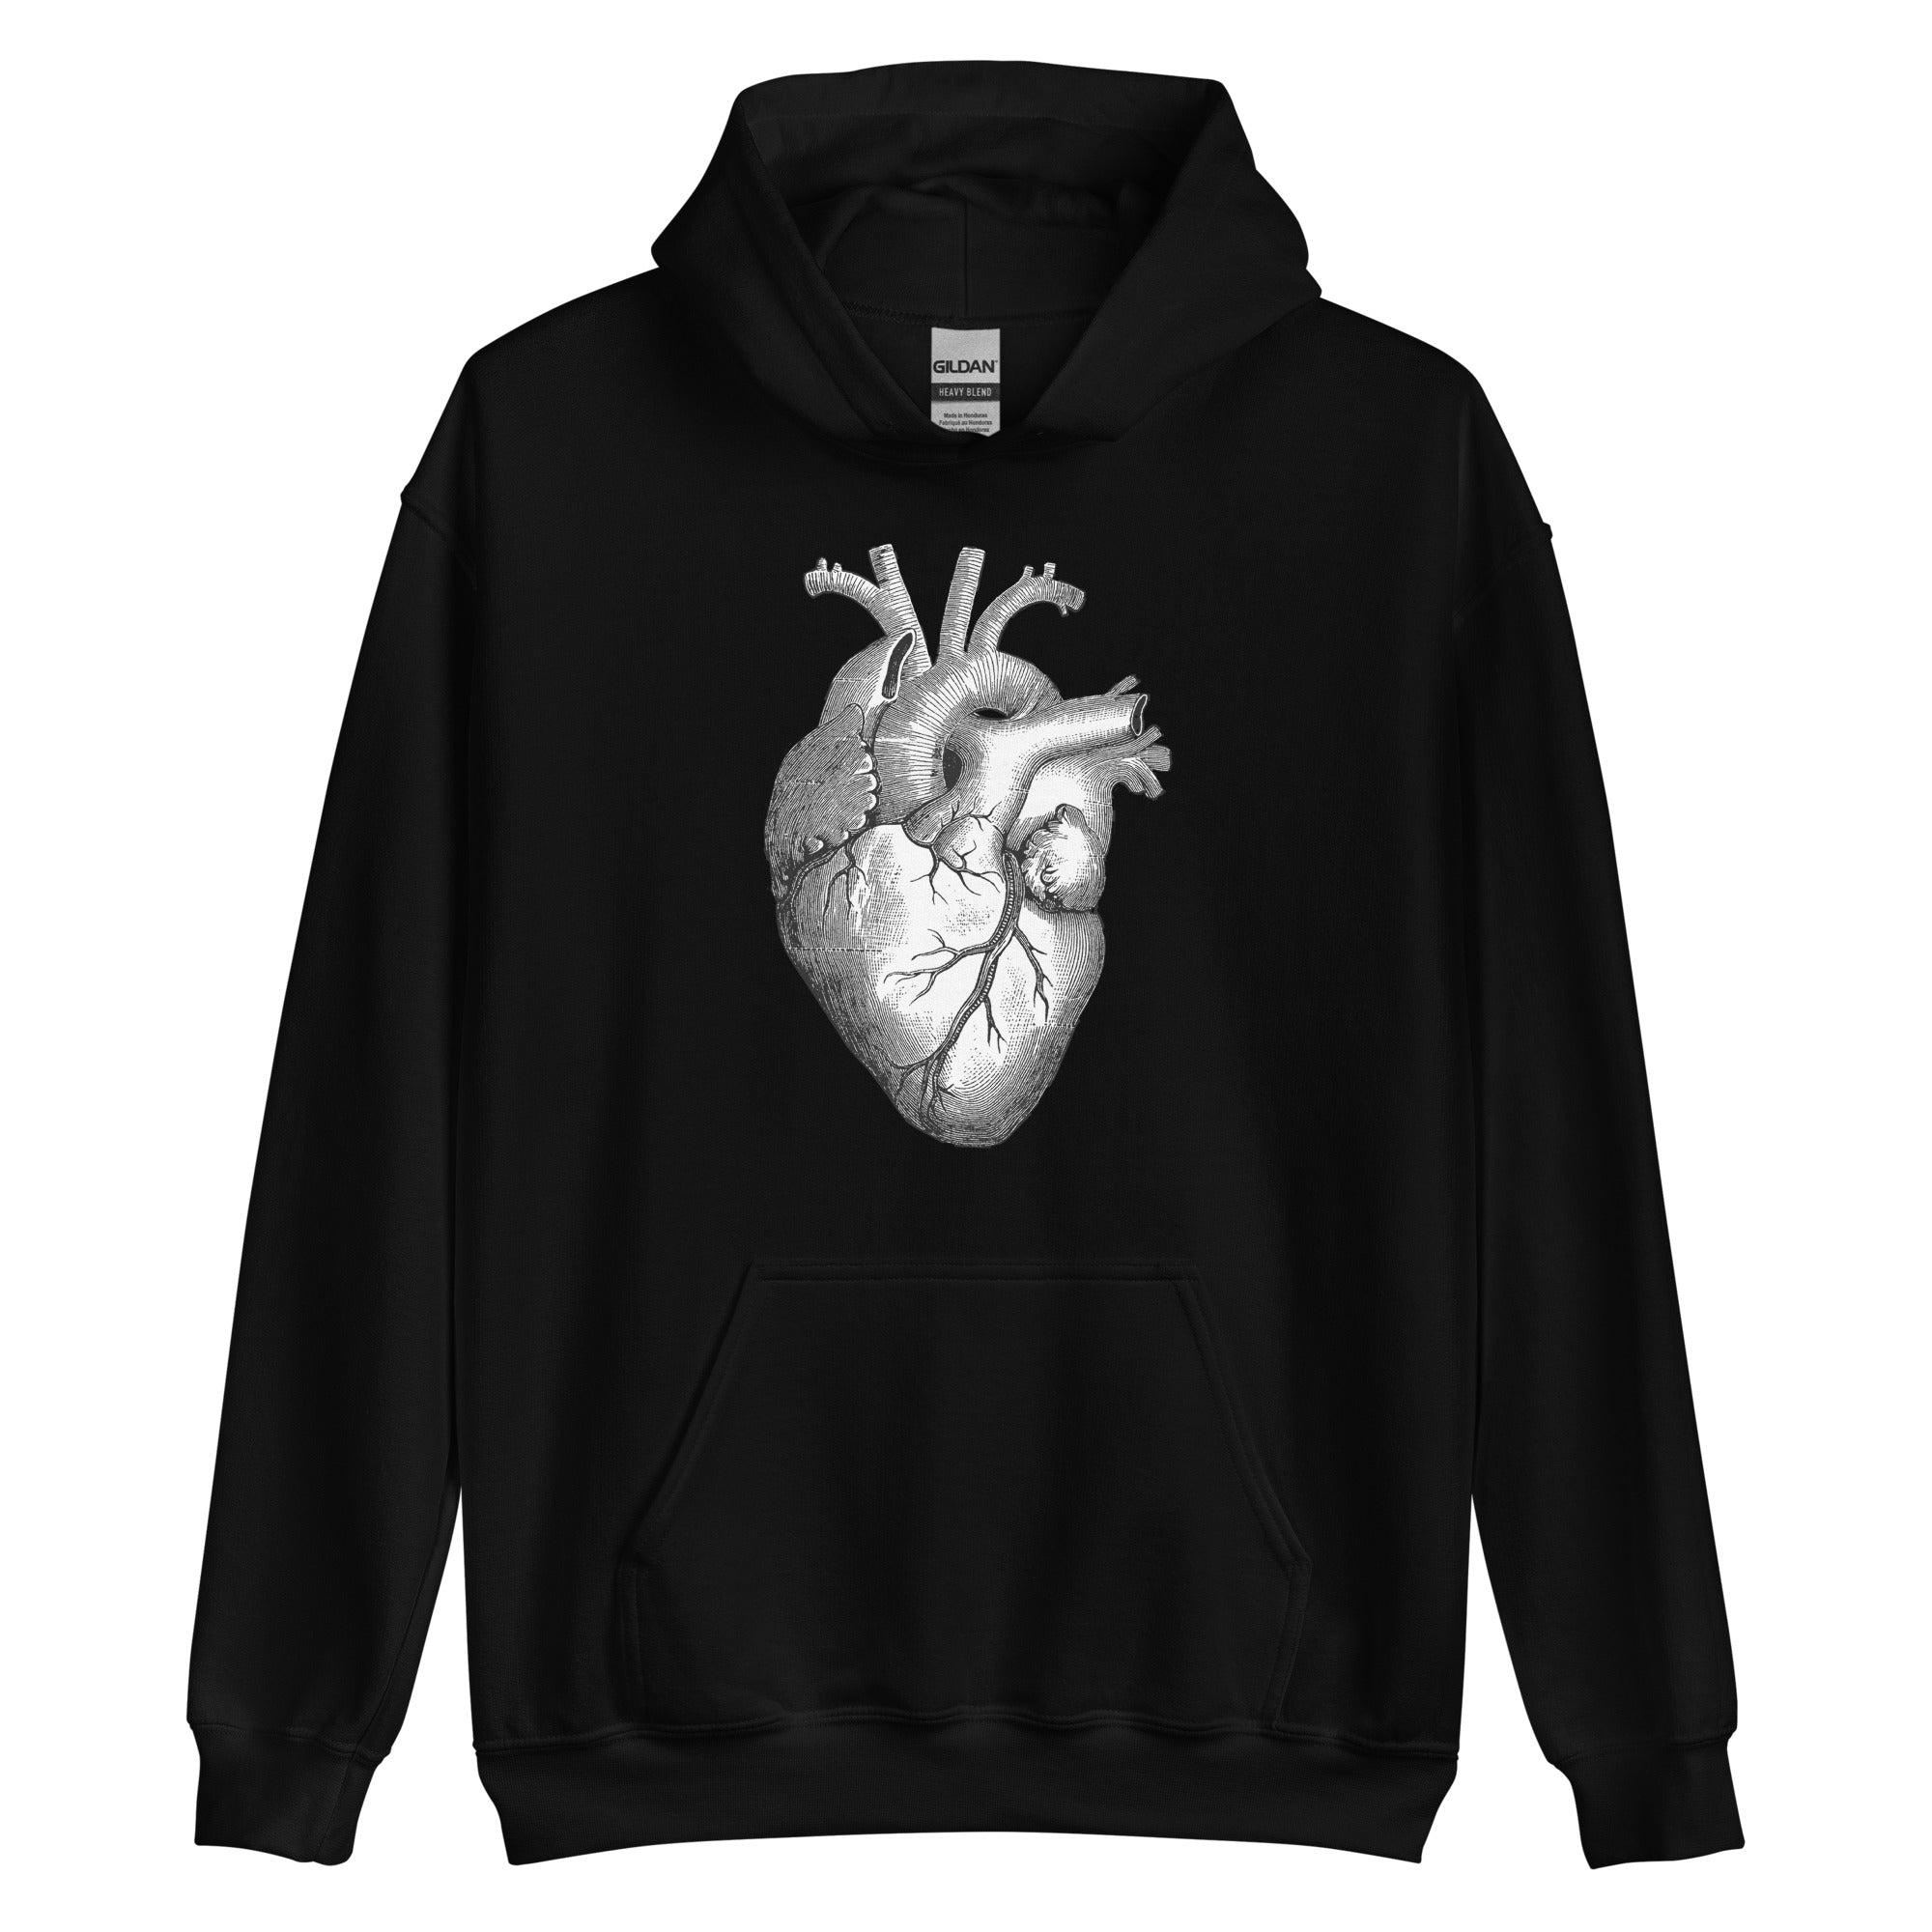 Anatomical Human Heart Medical Art Unisex Hoodie Sweatshirt Black and White - Edge of Life Designs